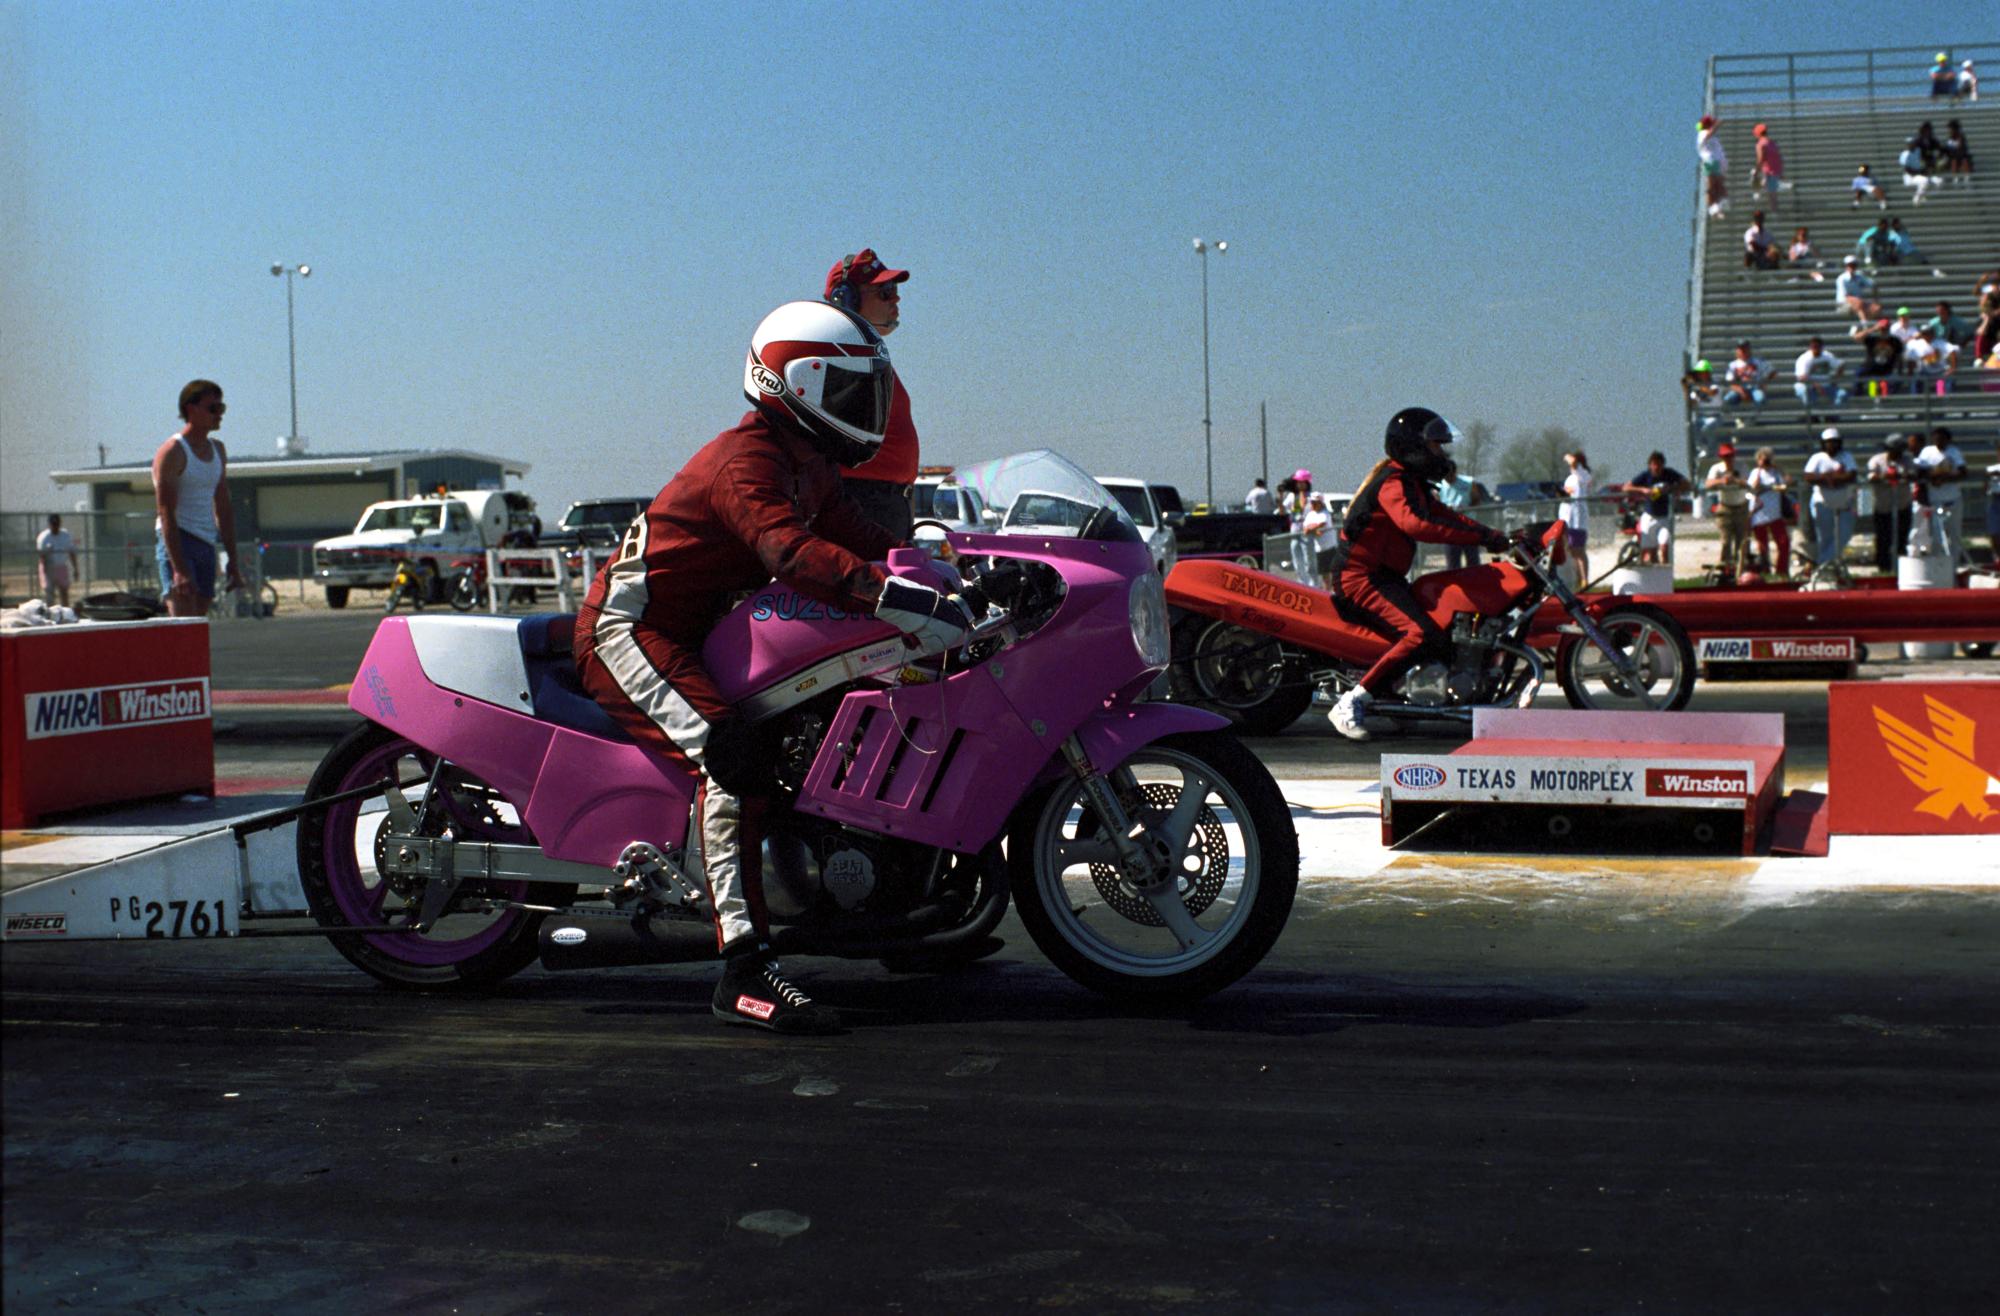 Texas Motor Drag Racing (1991) - Drag Racing Warm Up Start #6